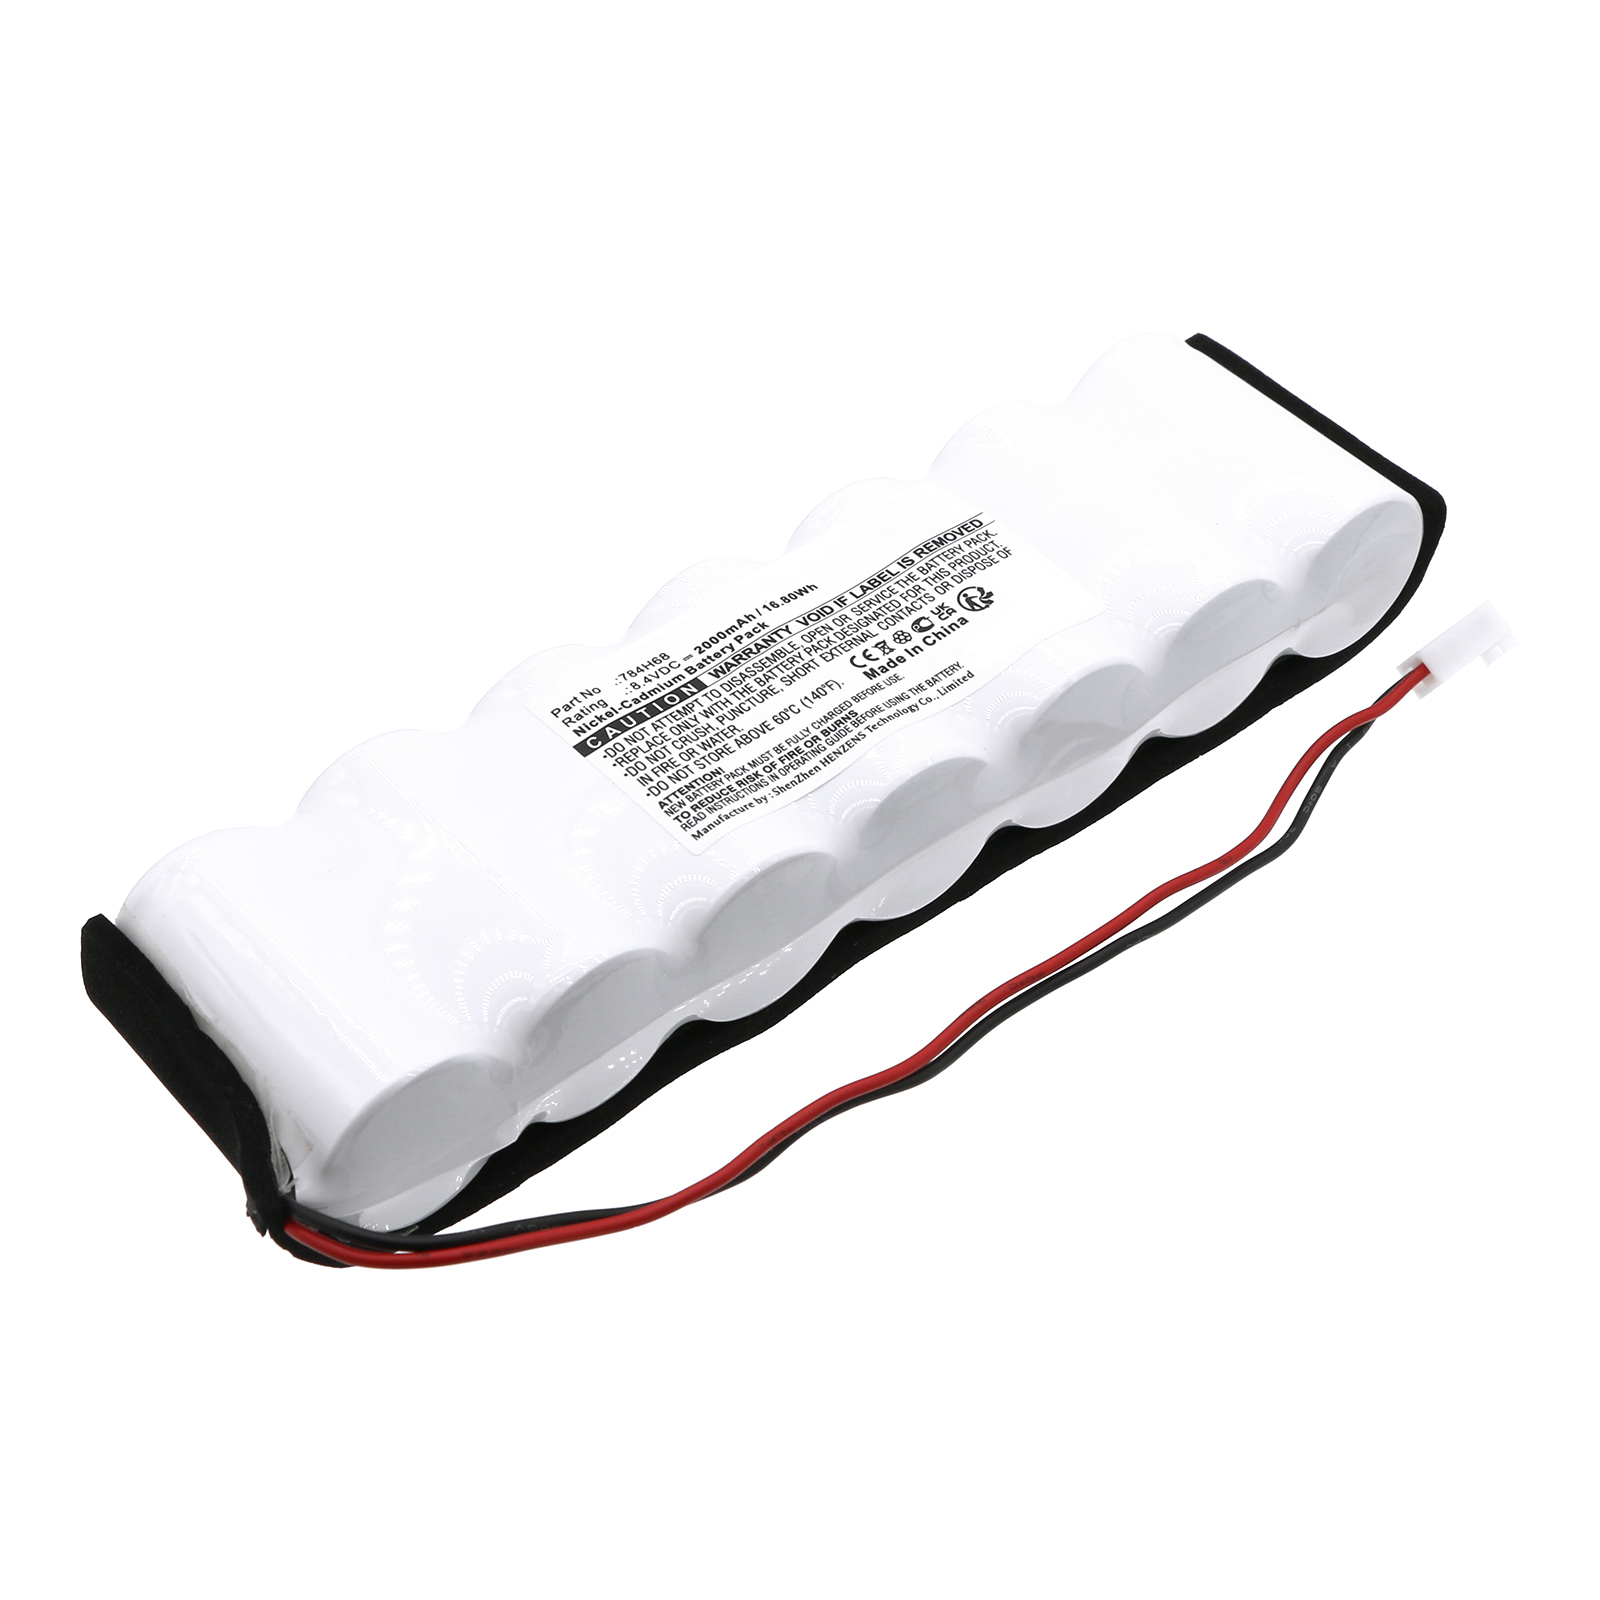 Synergy Digital Emergency Lighting Battery, Compatible with DUAL-LITE D-SC 1800BT Emergency Lighting Battery (Ni-CD, 8.4V, 2000mAh)